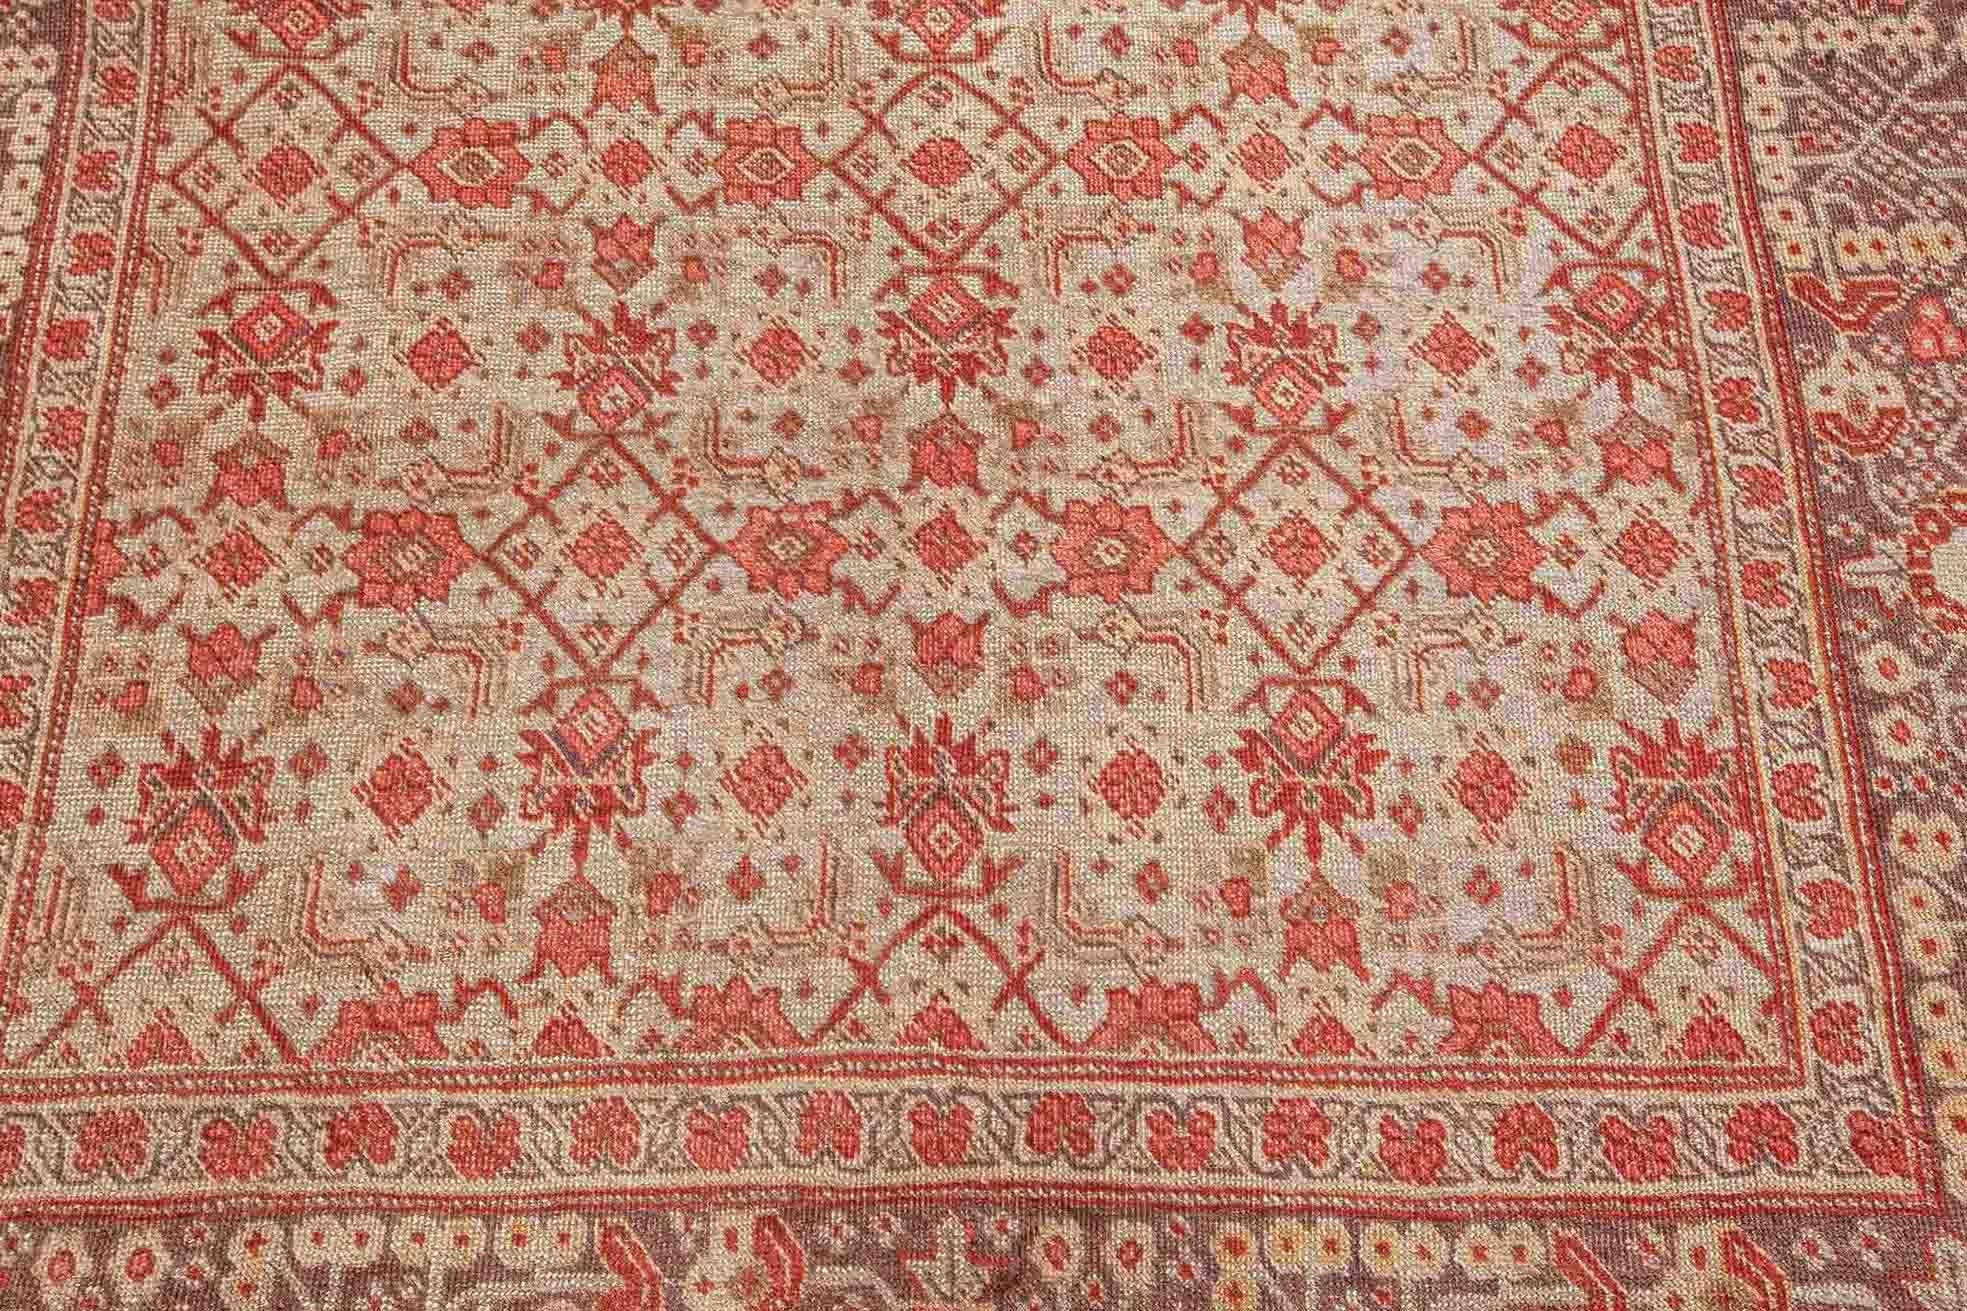 Antique Persian Tabriz rug
Size: 4'1